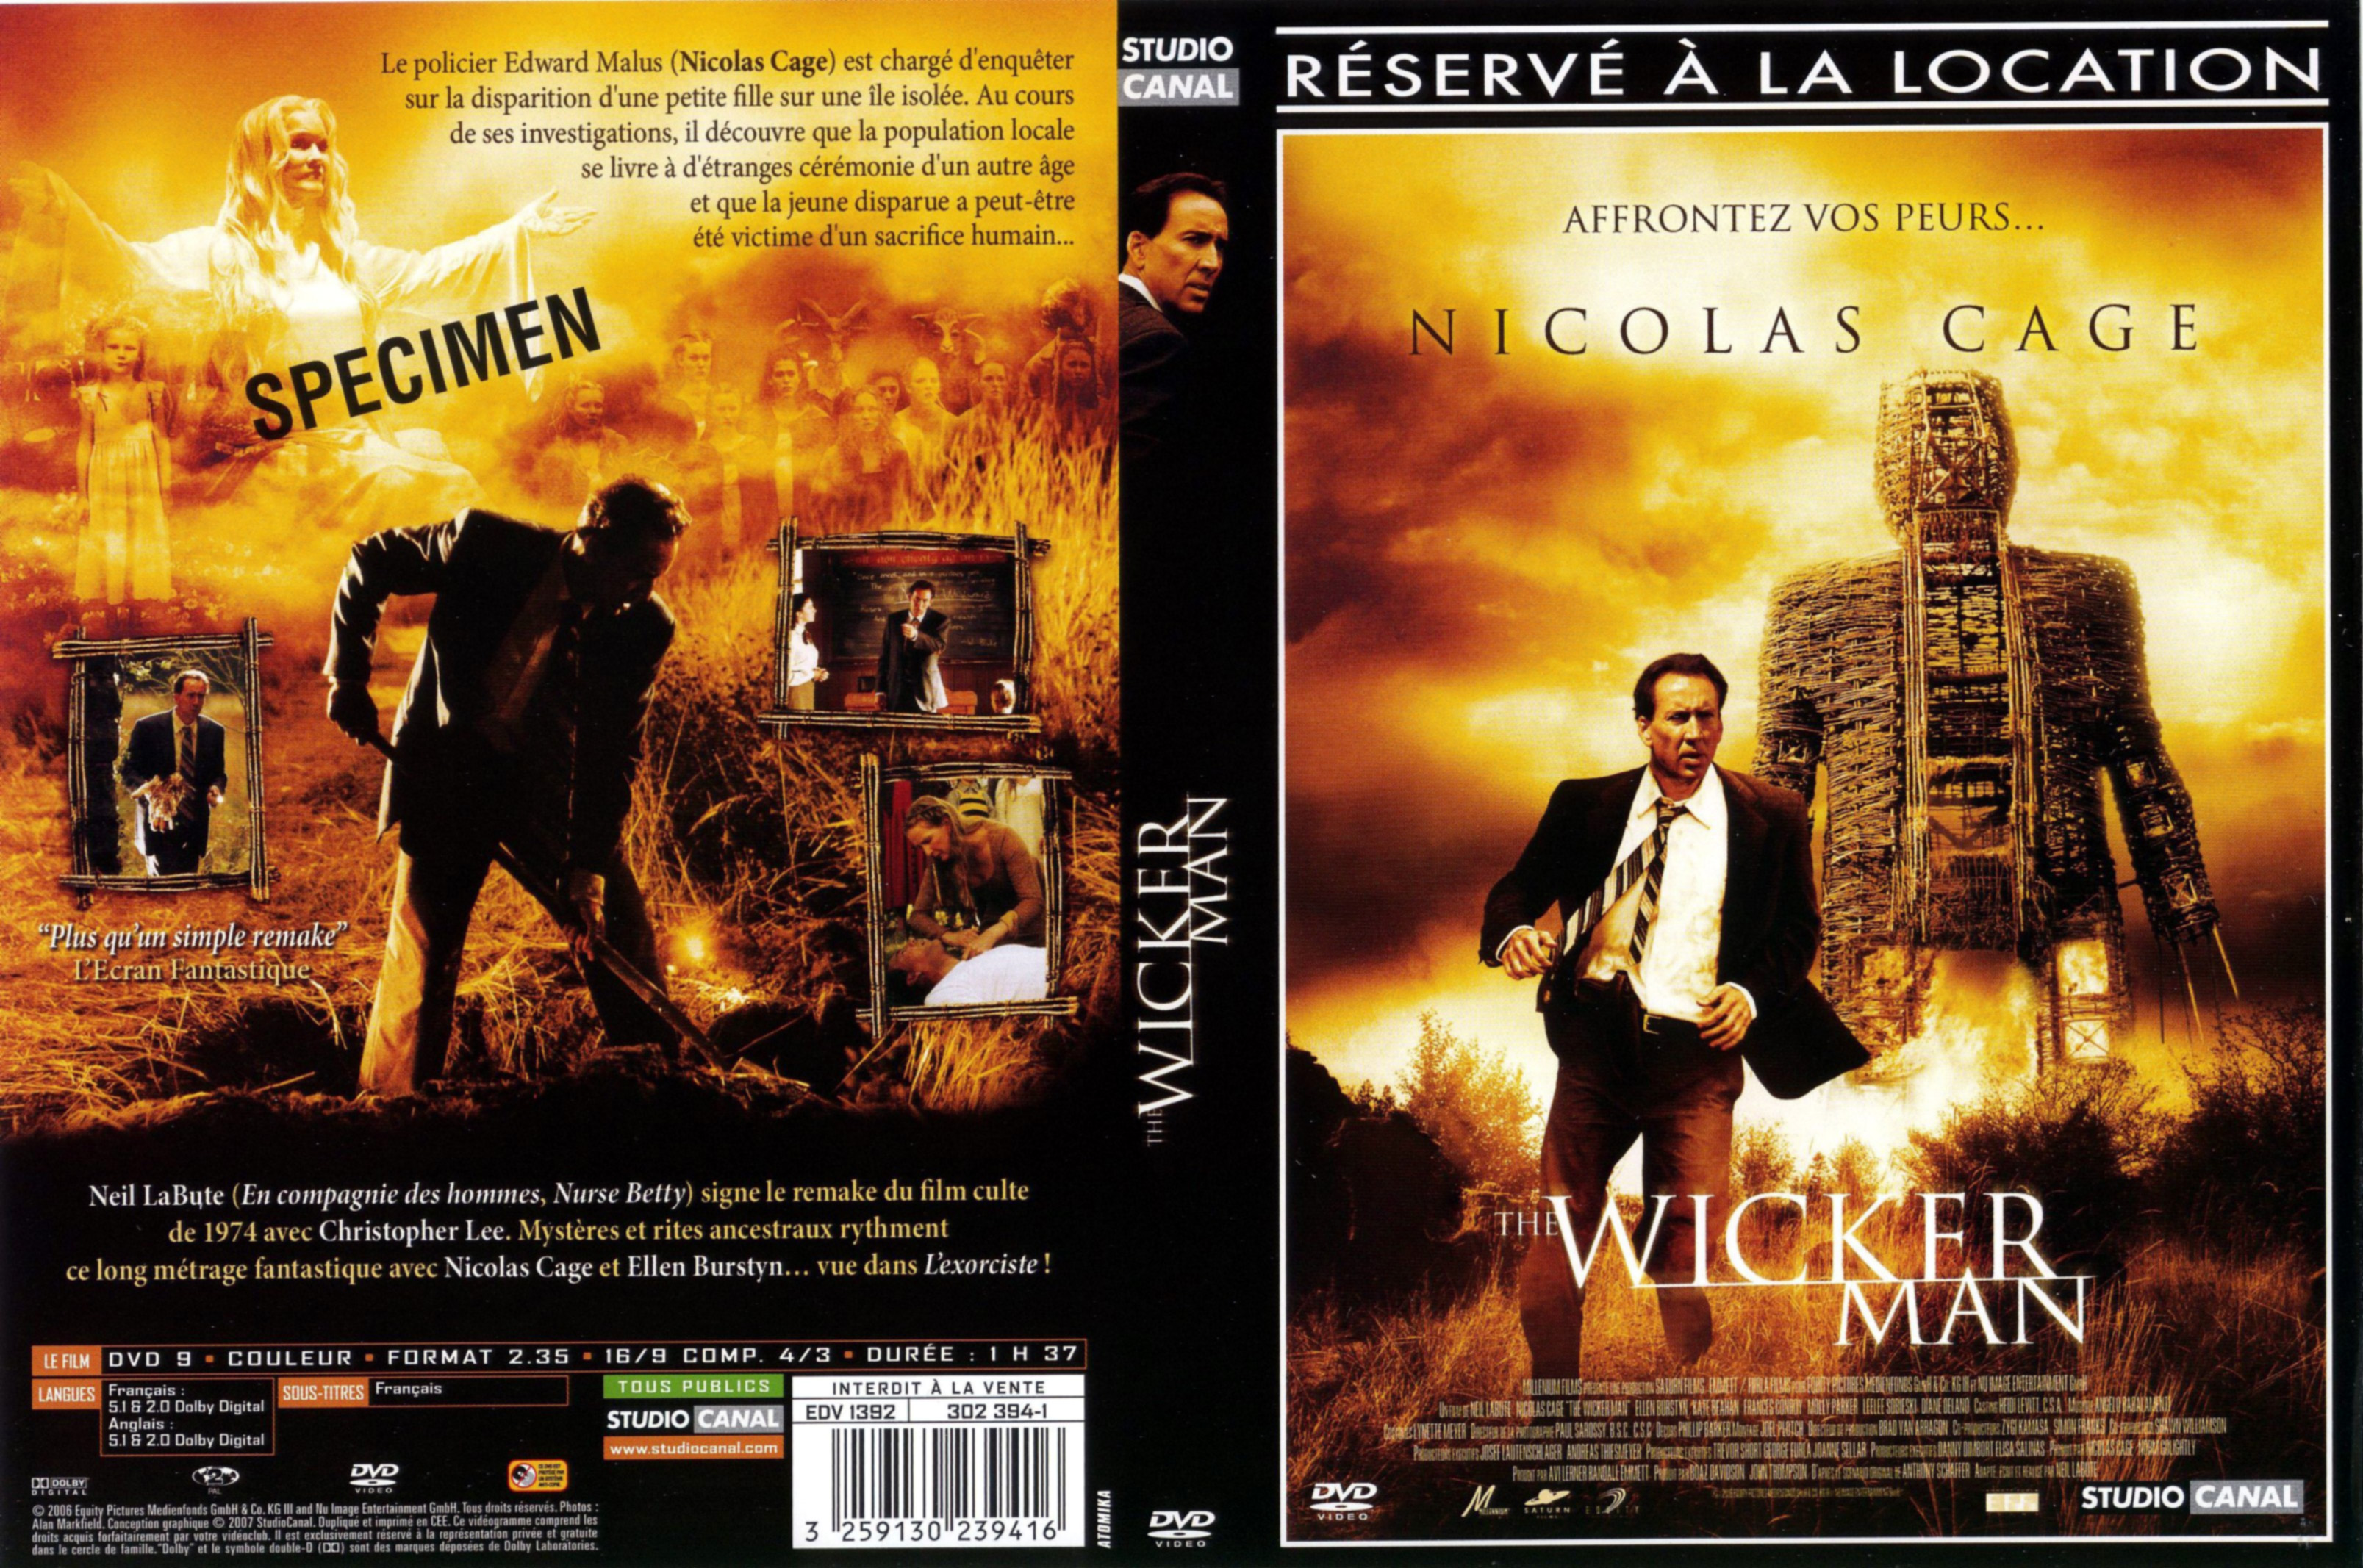 Jaquette DVD The wicker man (2006)